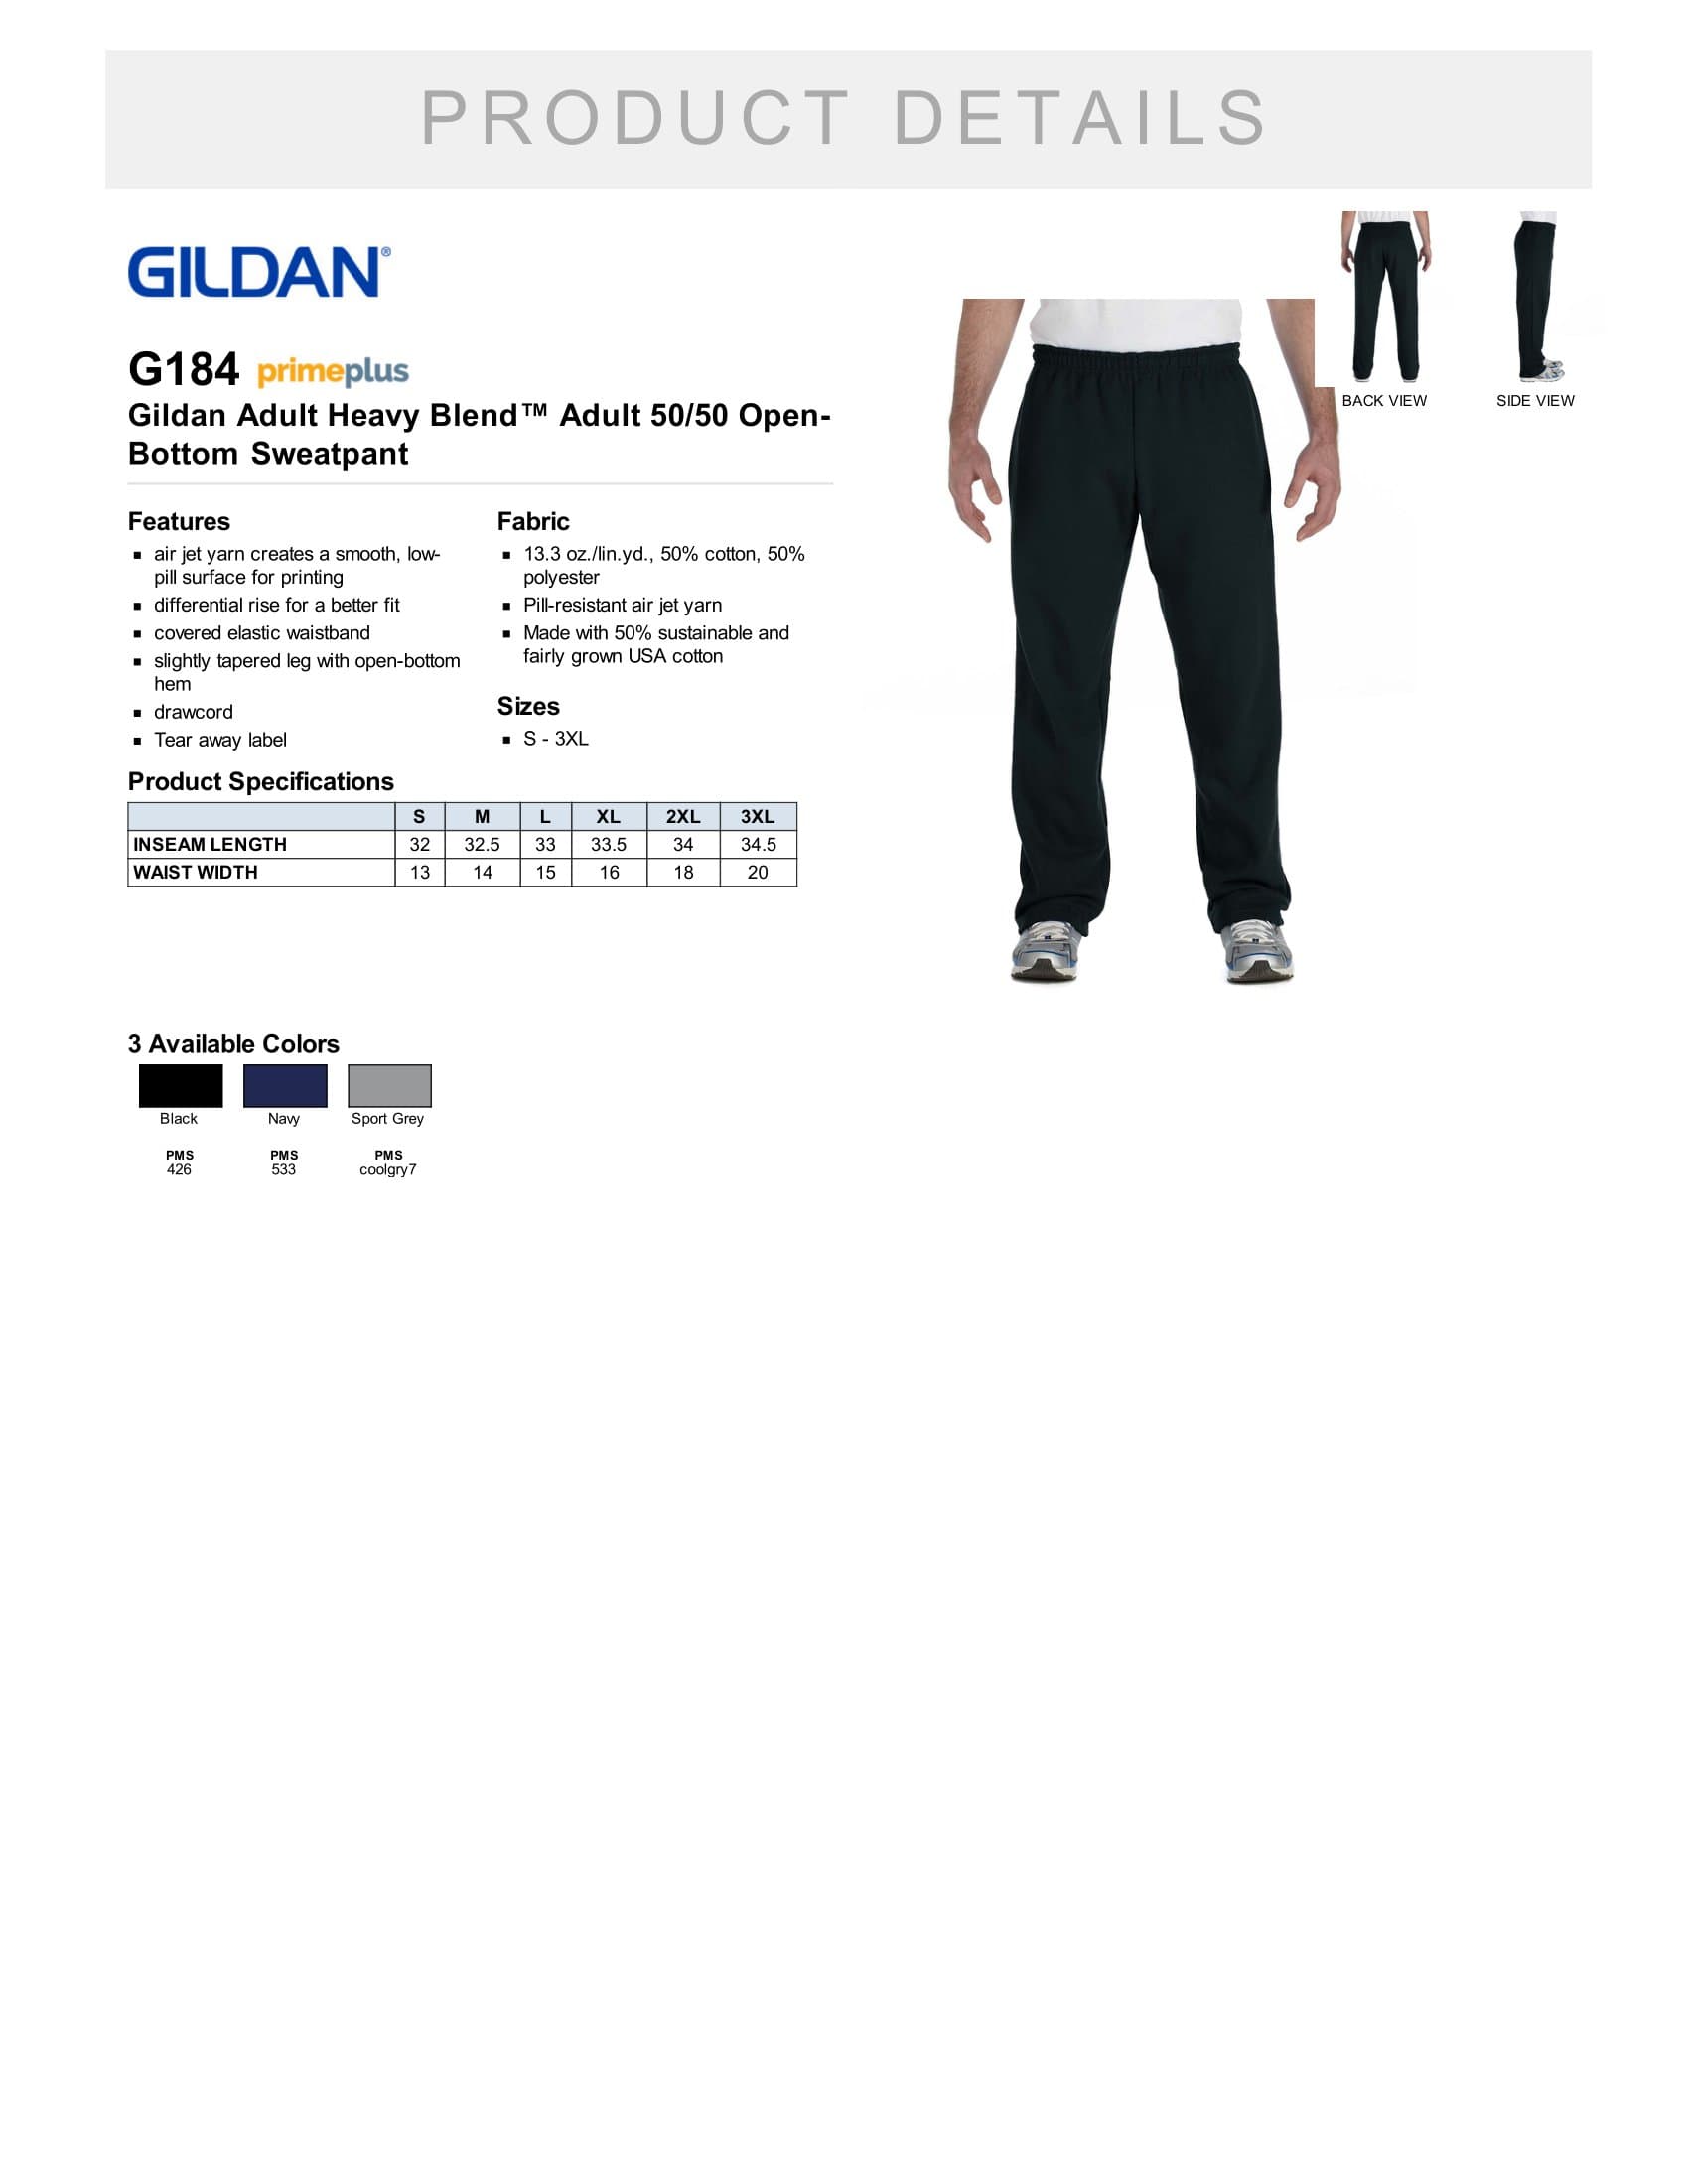 Gildan G184 